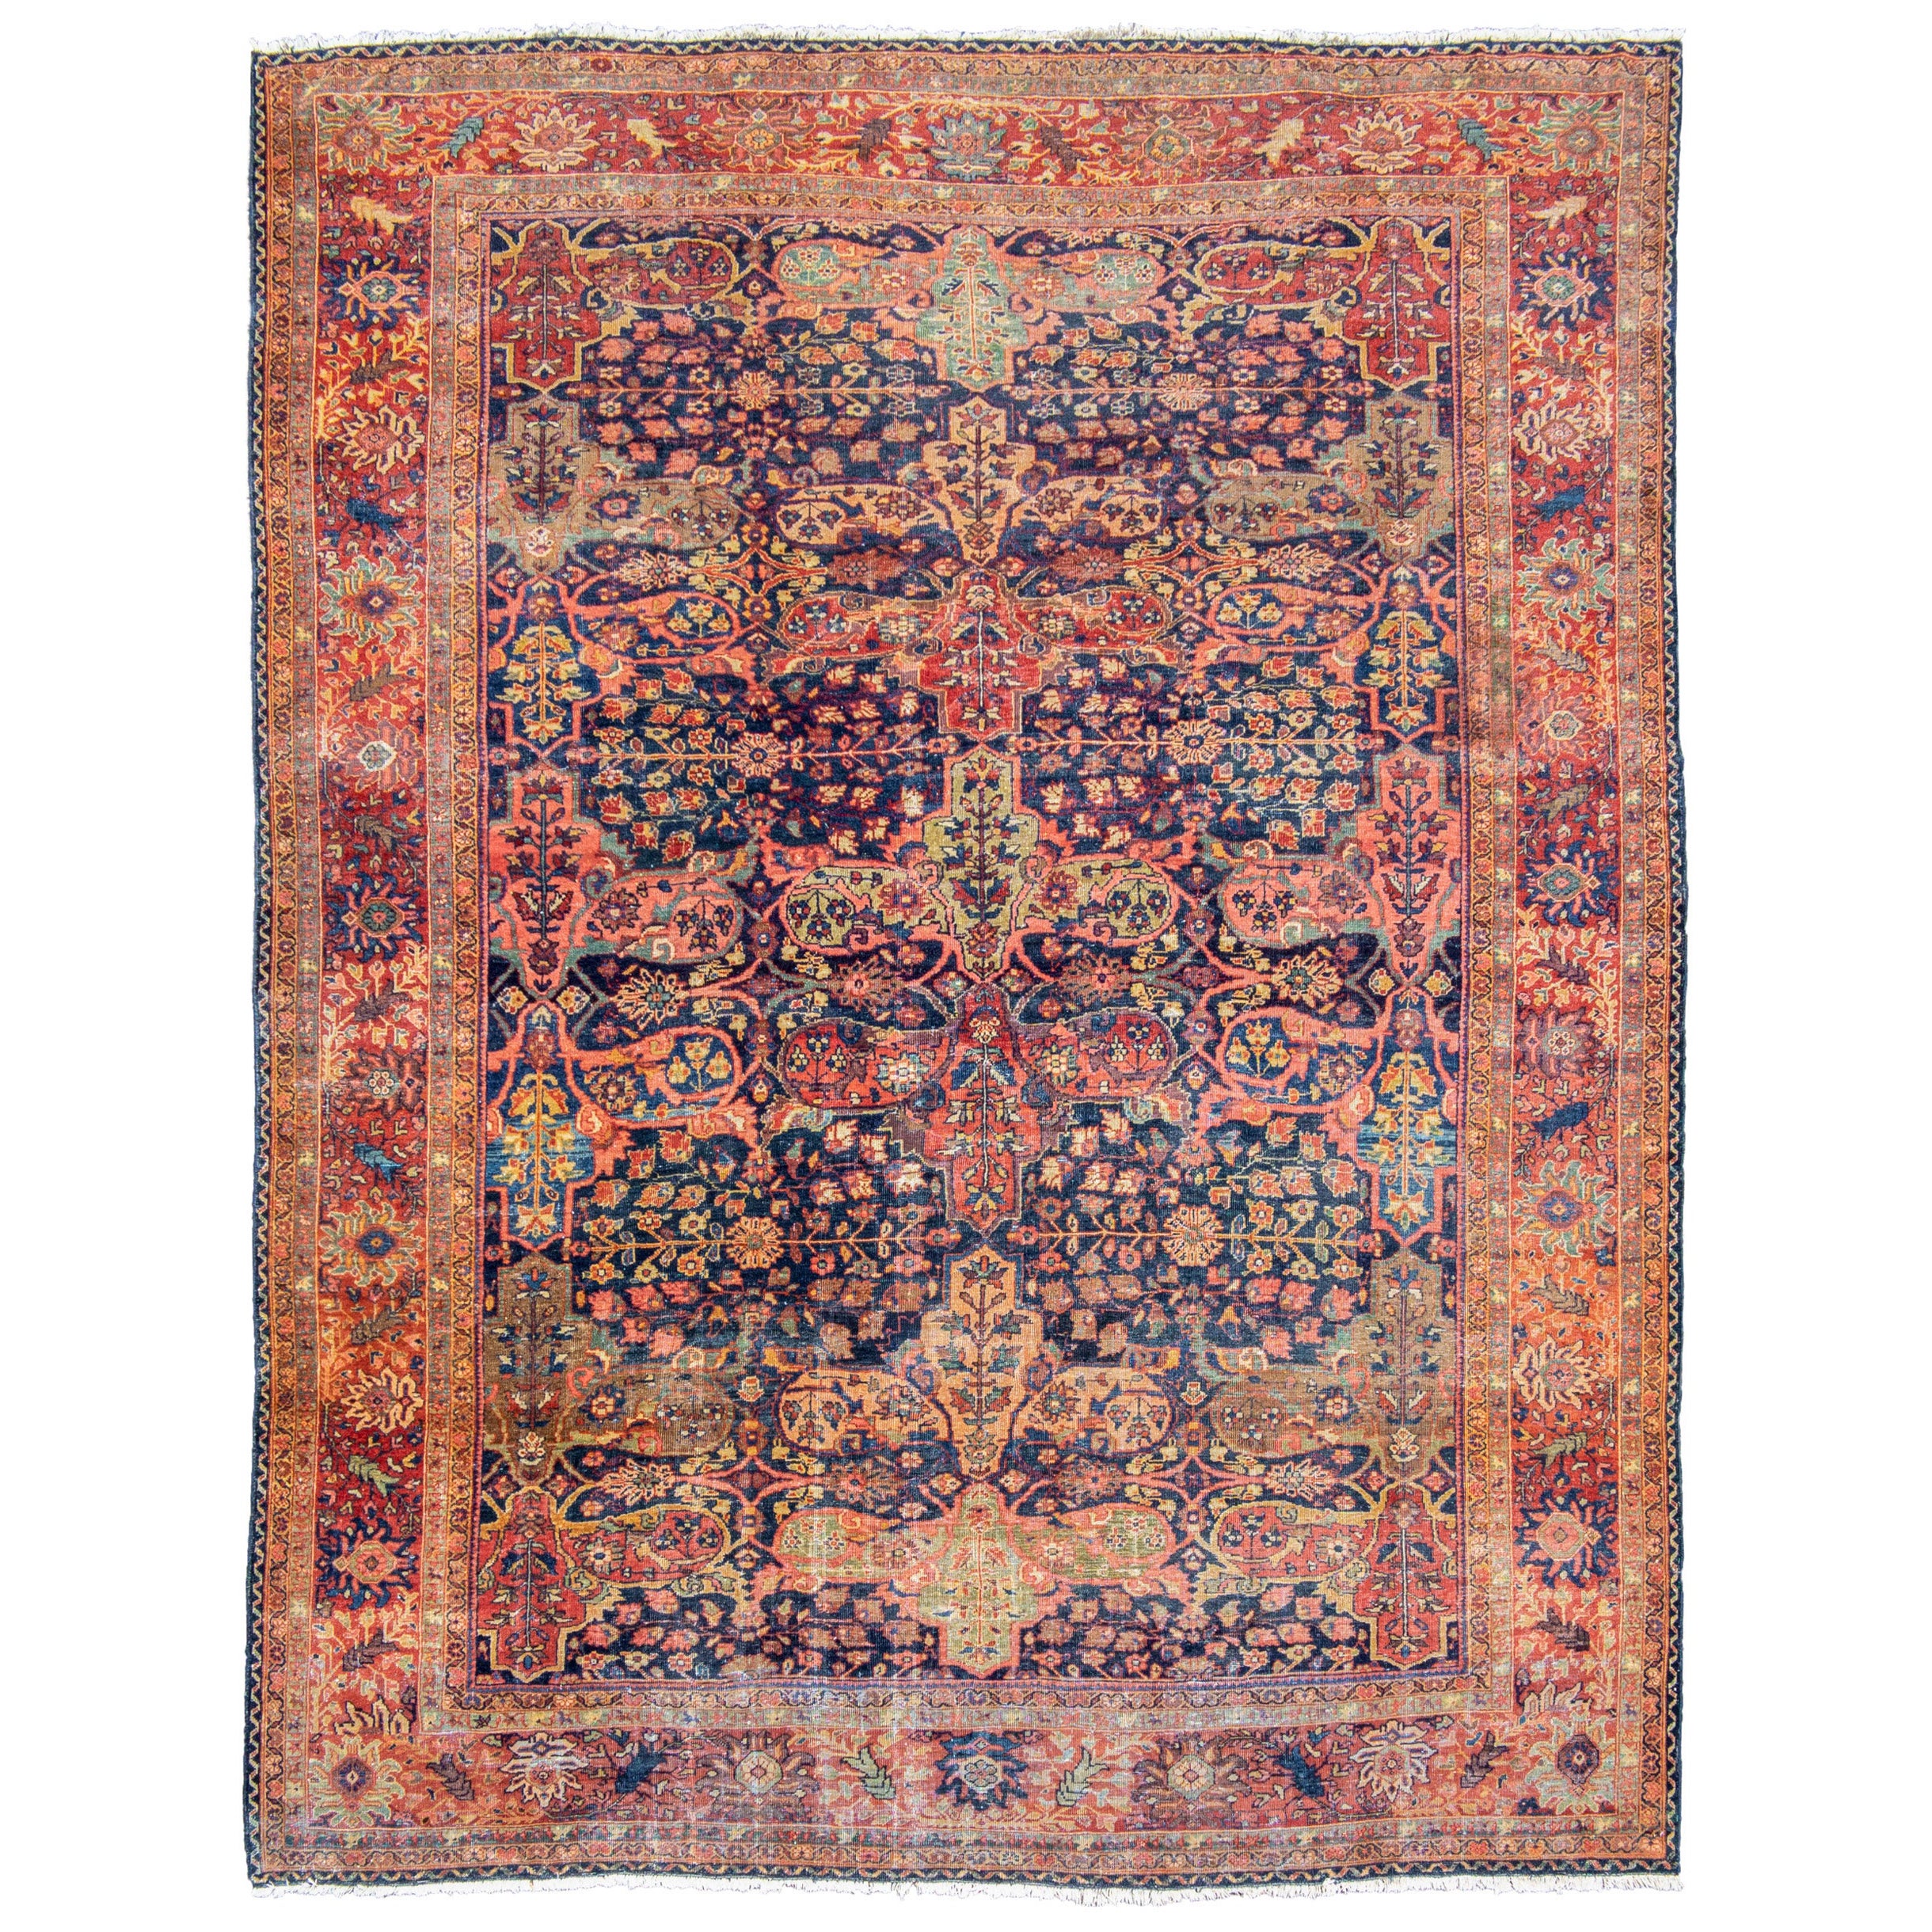 Antique Persian Fereghan Carpet, c. 1900